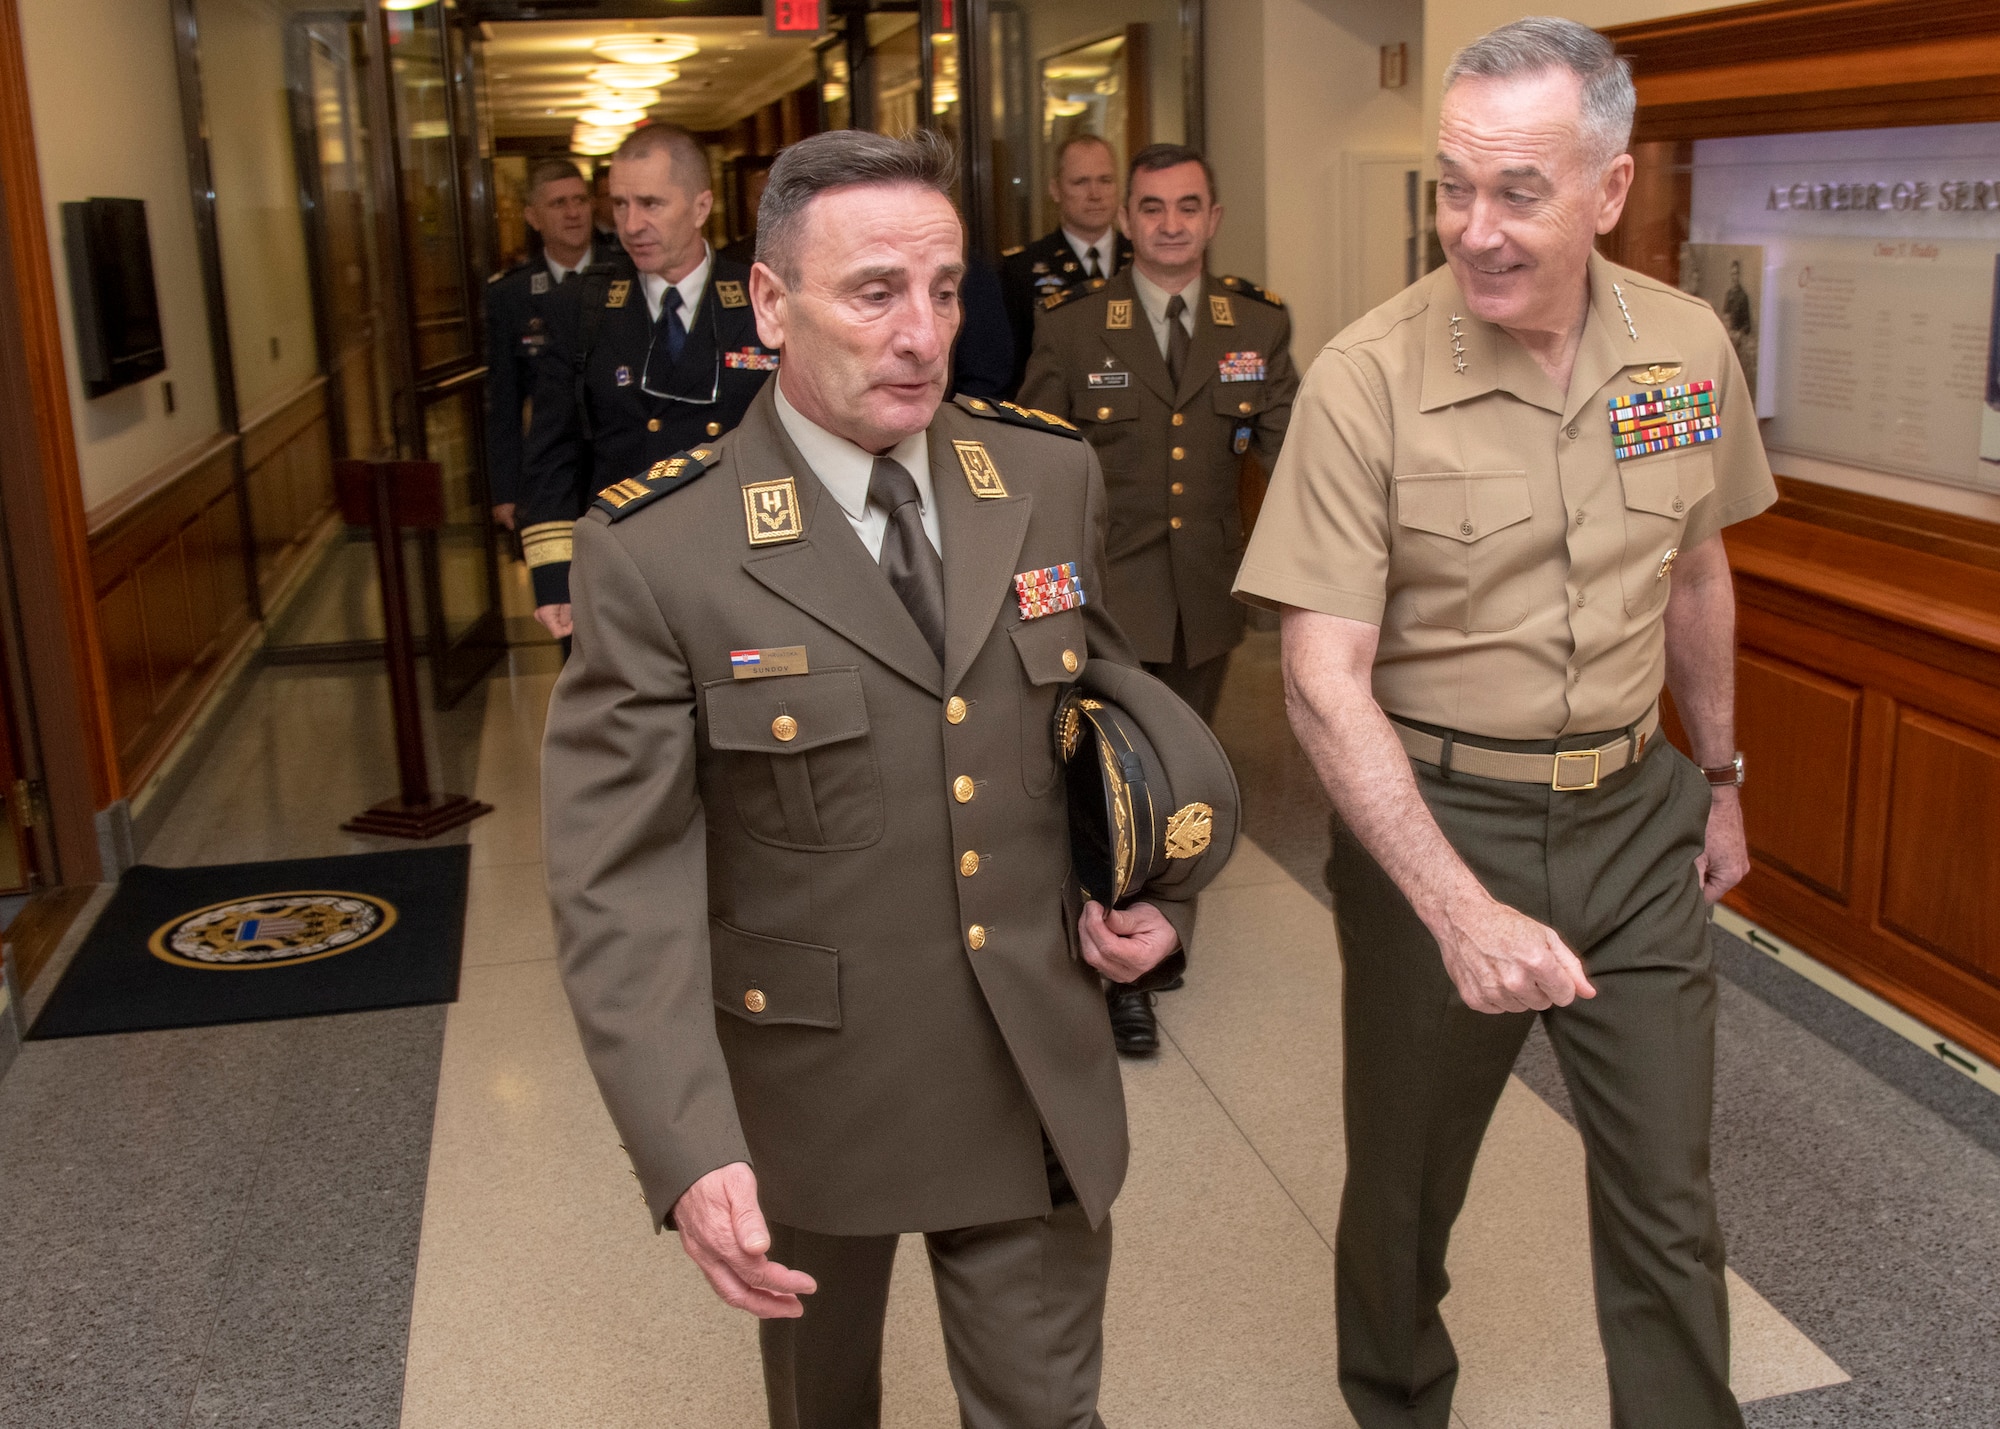 Chairman of the Joint Chiefs of Staff Gen. Joe Dunford hosts Croatian Chief of Defense Gen. Mirko Sundov for an official visit in the Pentagon, Washington D.C., April 15, 2019.